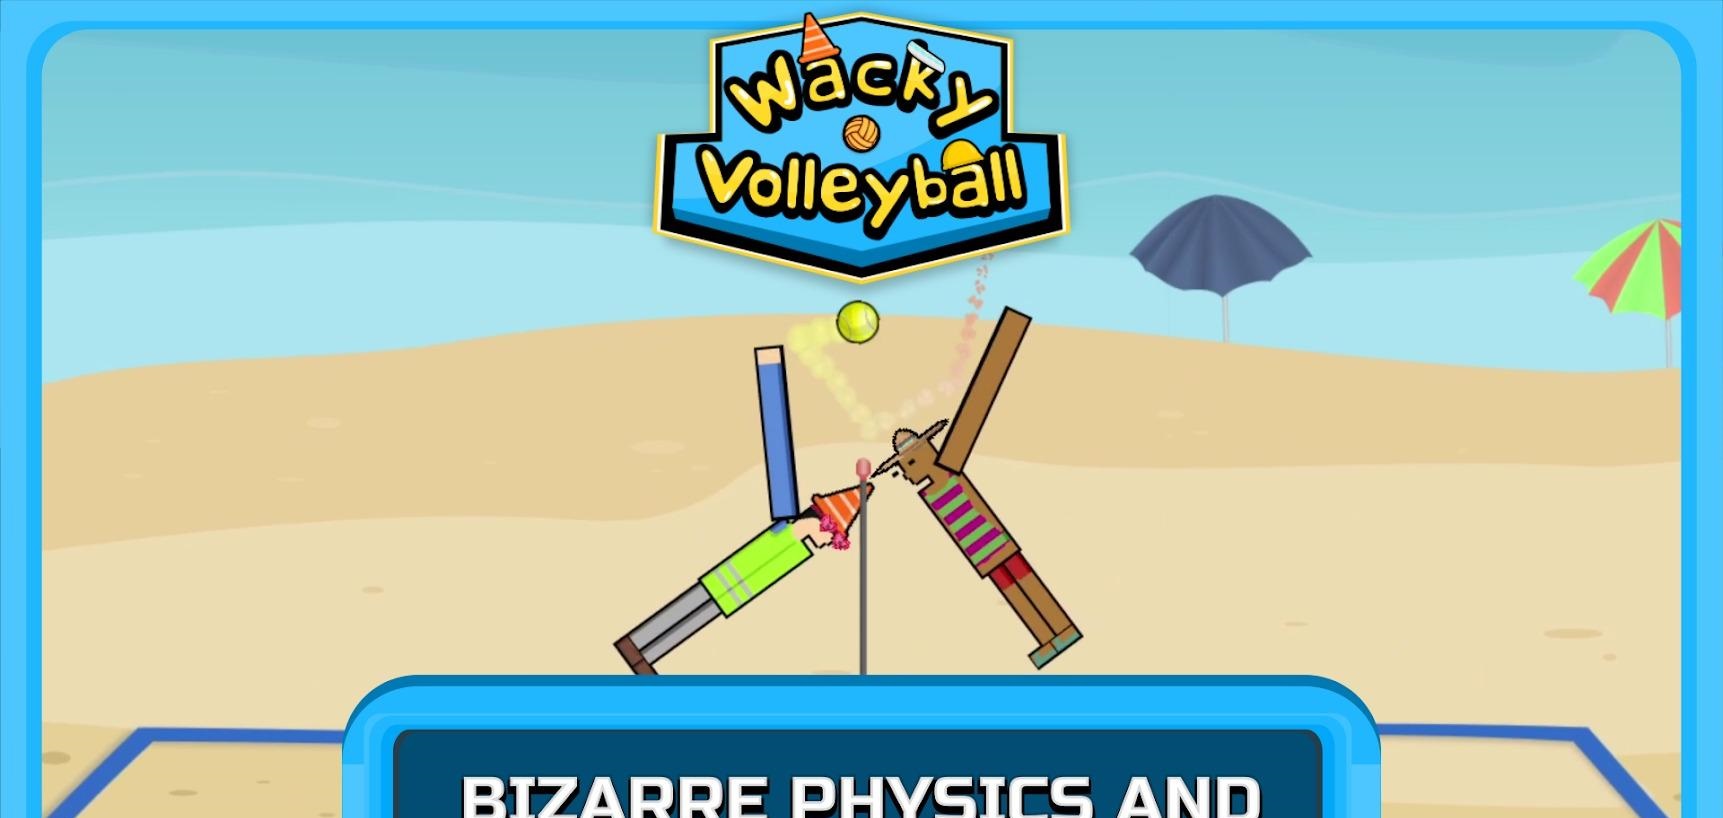 Wacky Volleyball